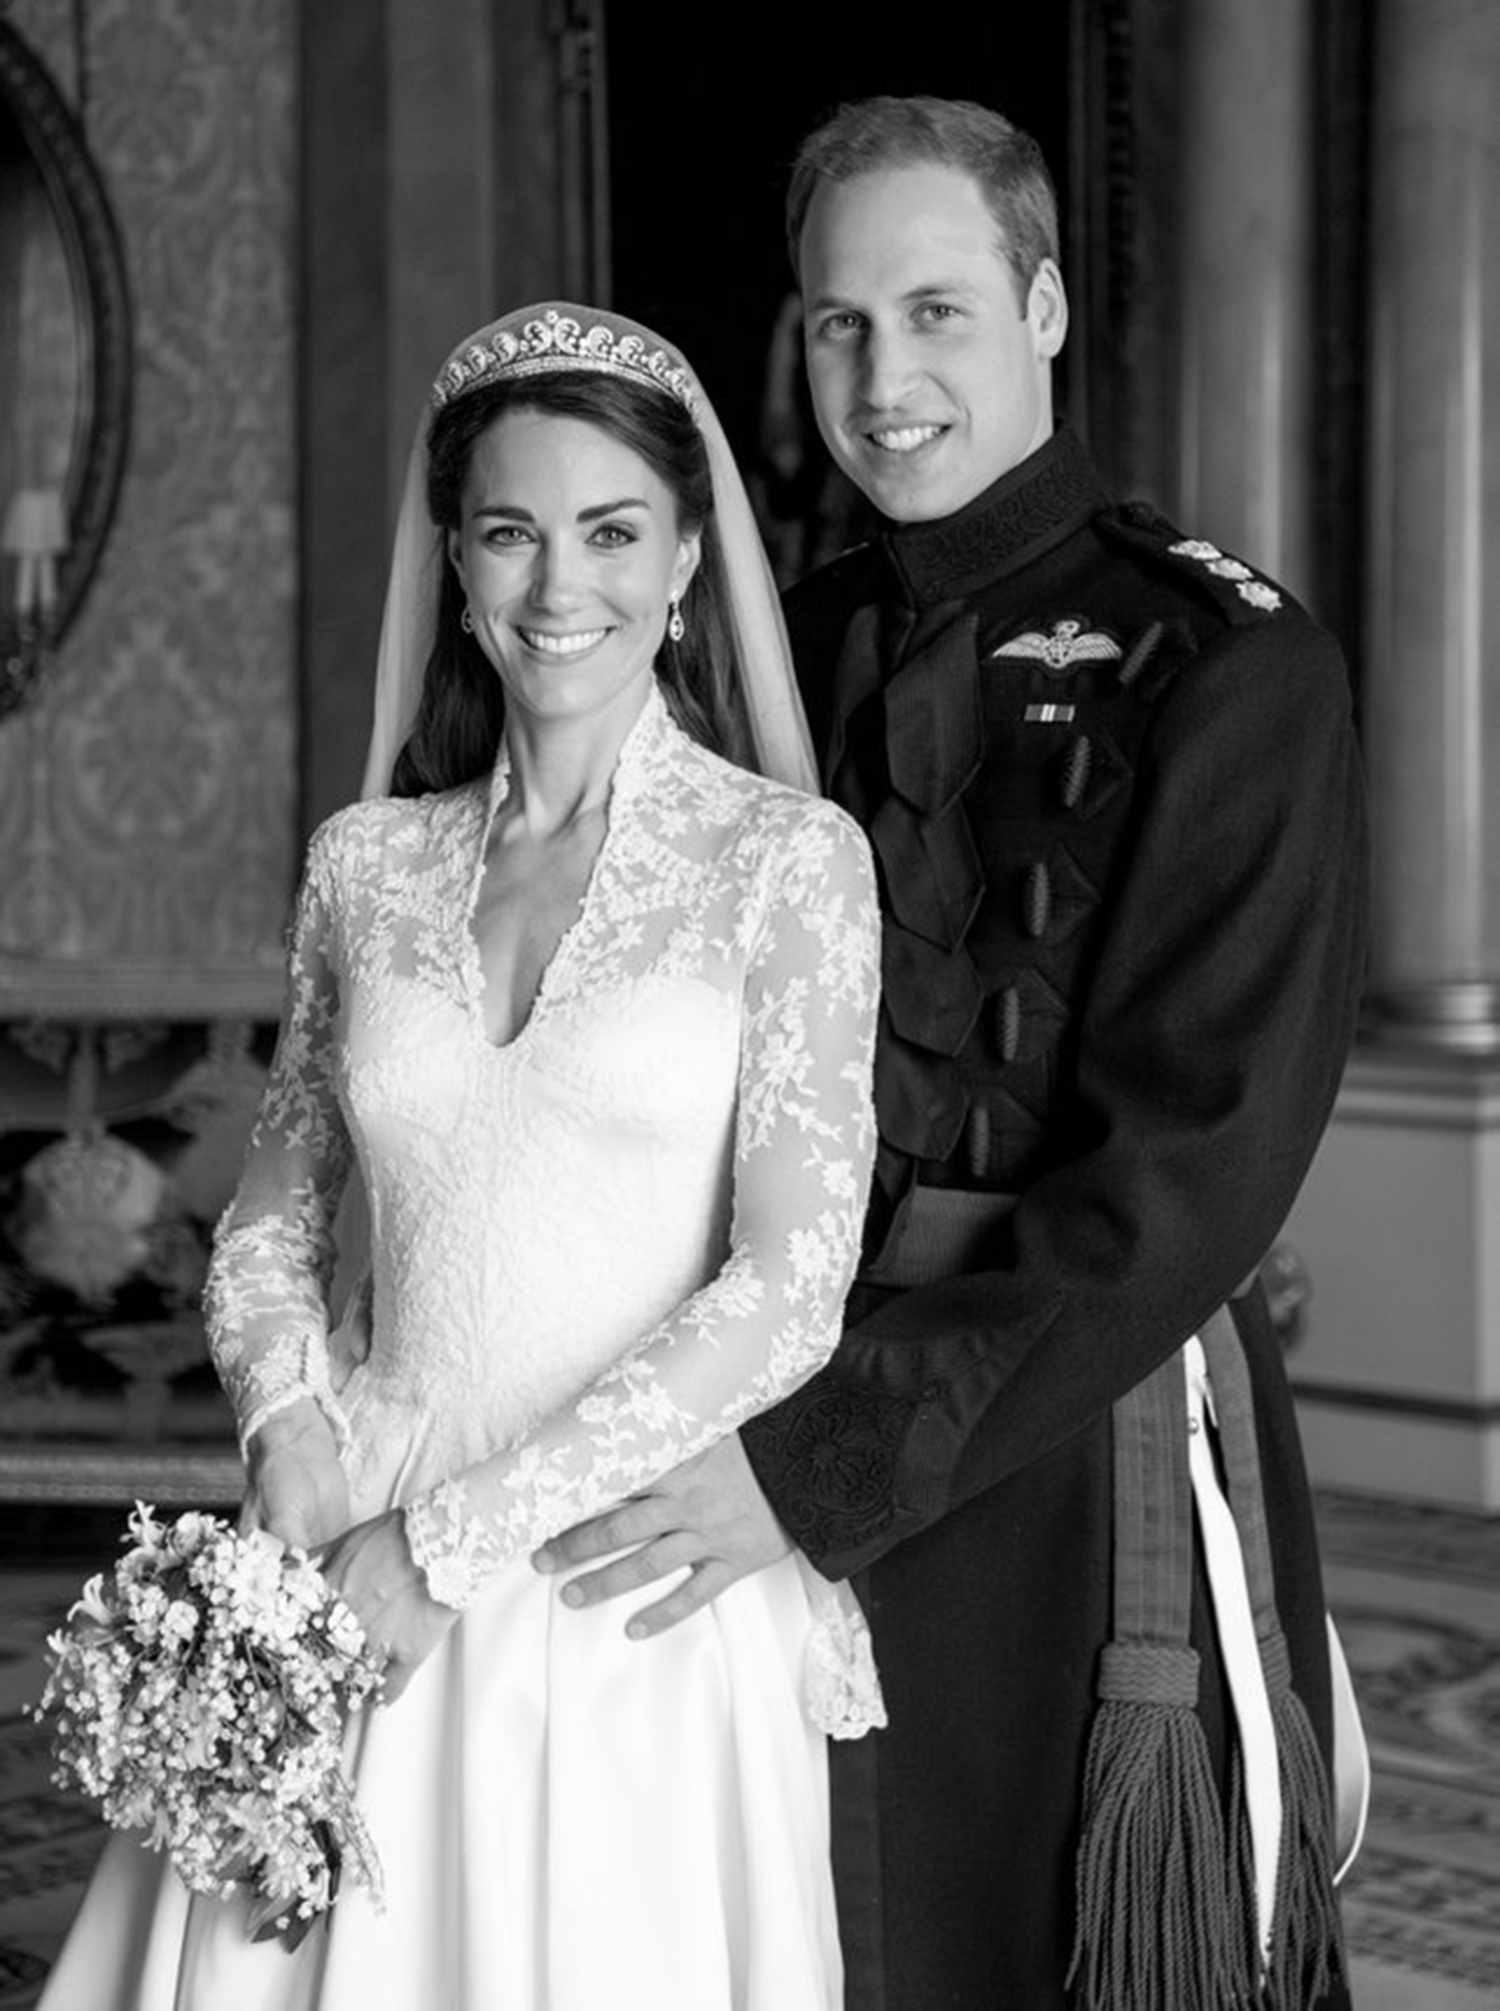 The Prince and Princess of Wales Wedding Anniversary